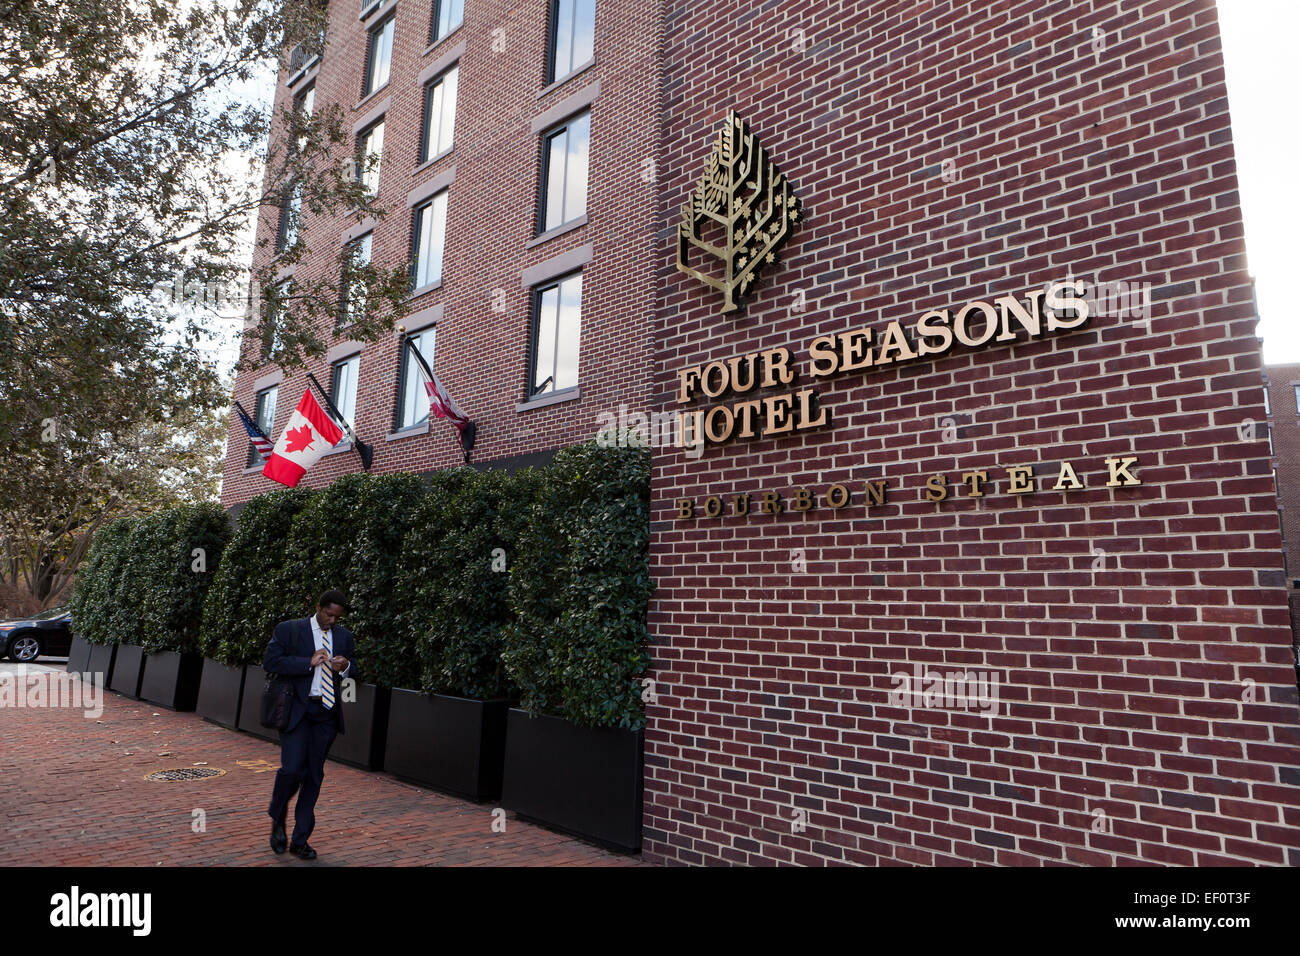 Four Seasons Hotel - Georgetown, Washington, DC USA Stock Photo